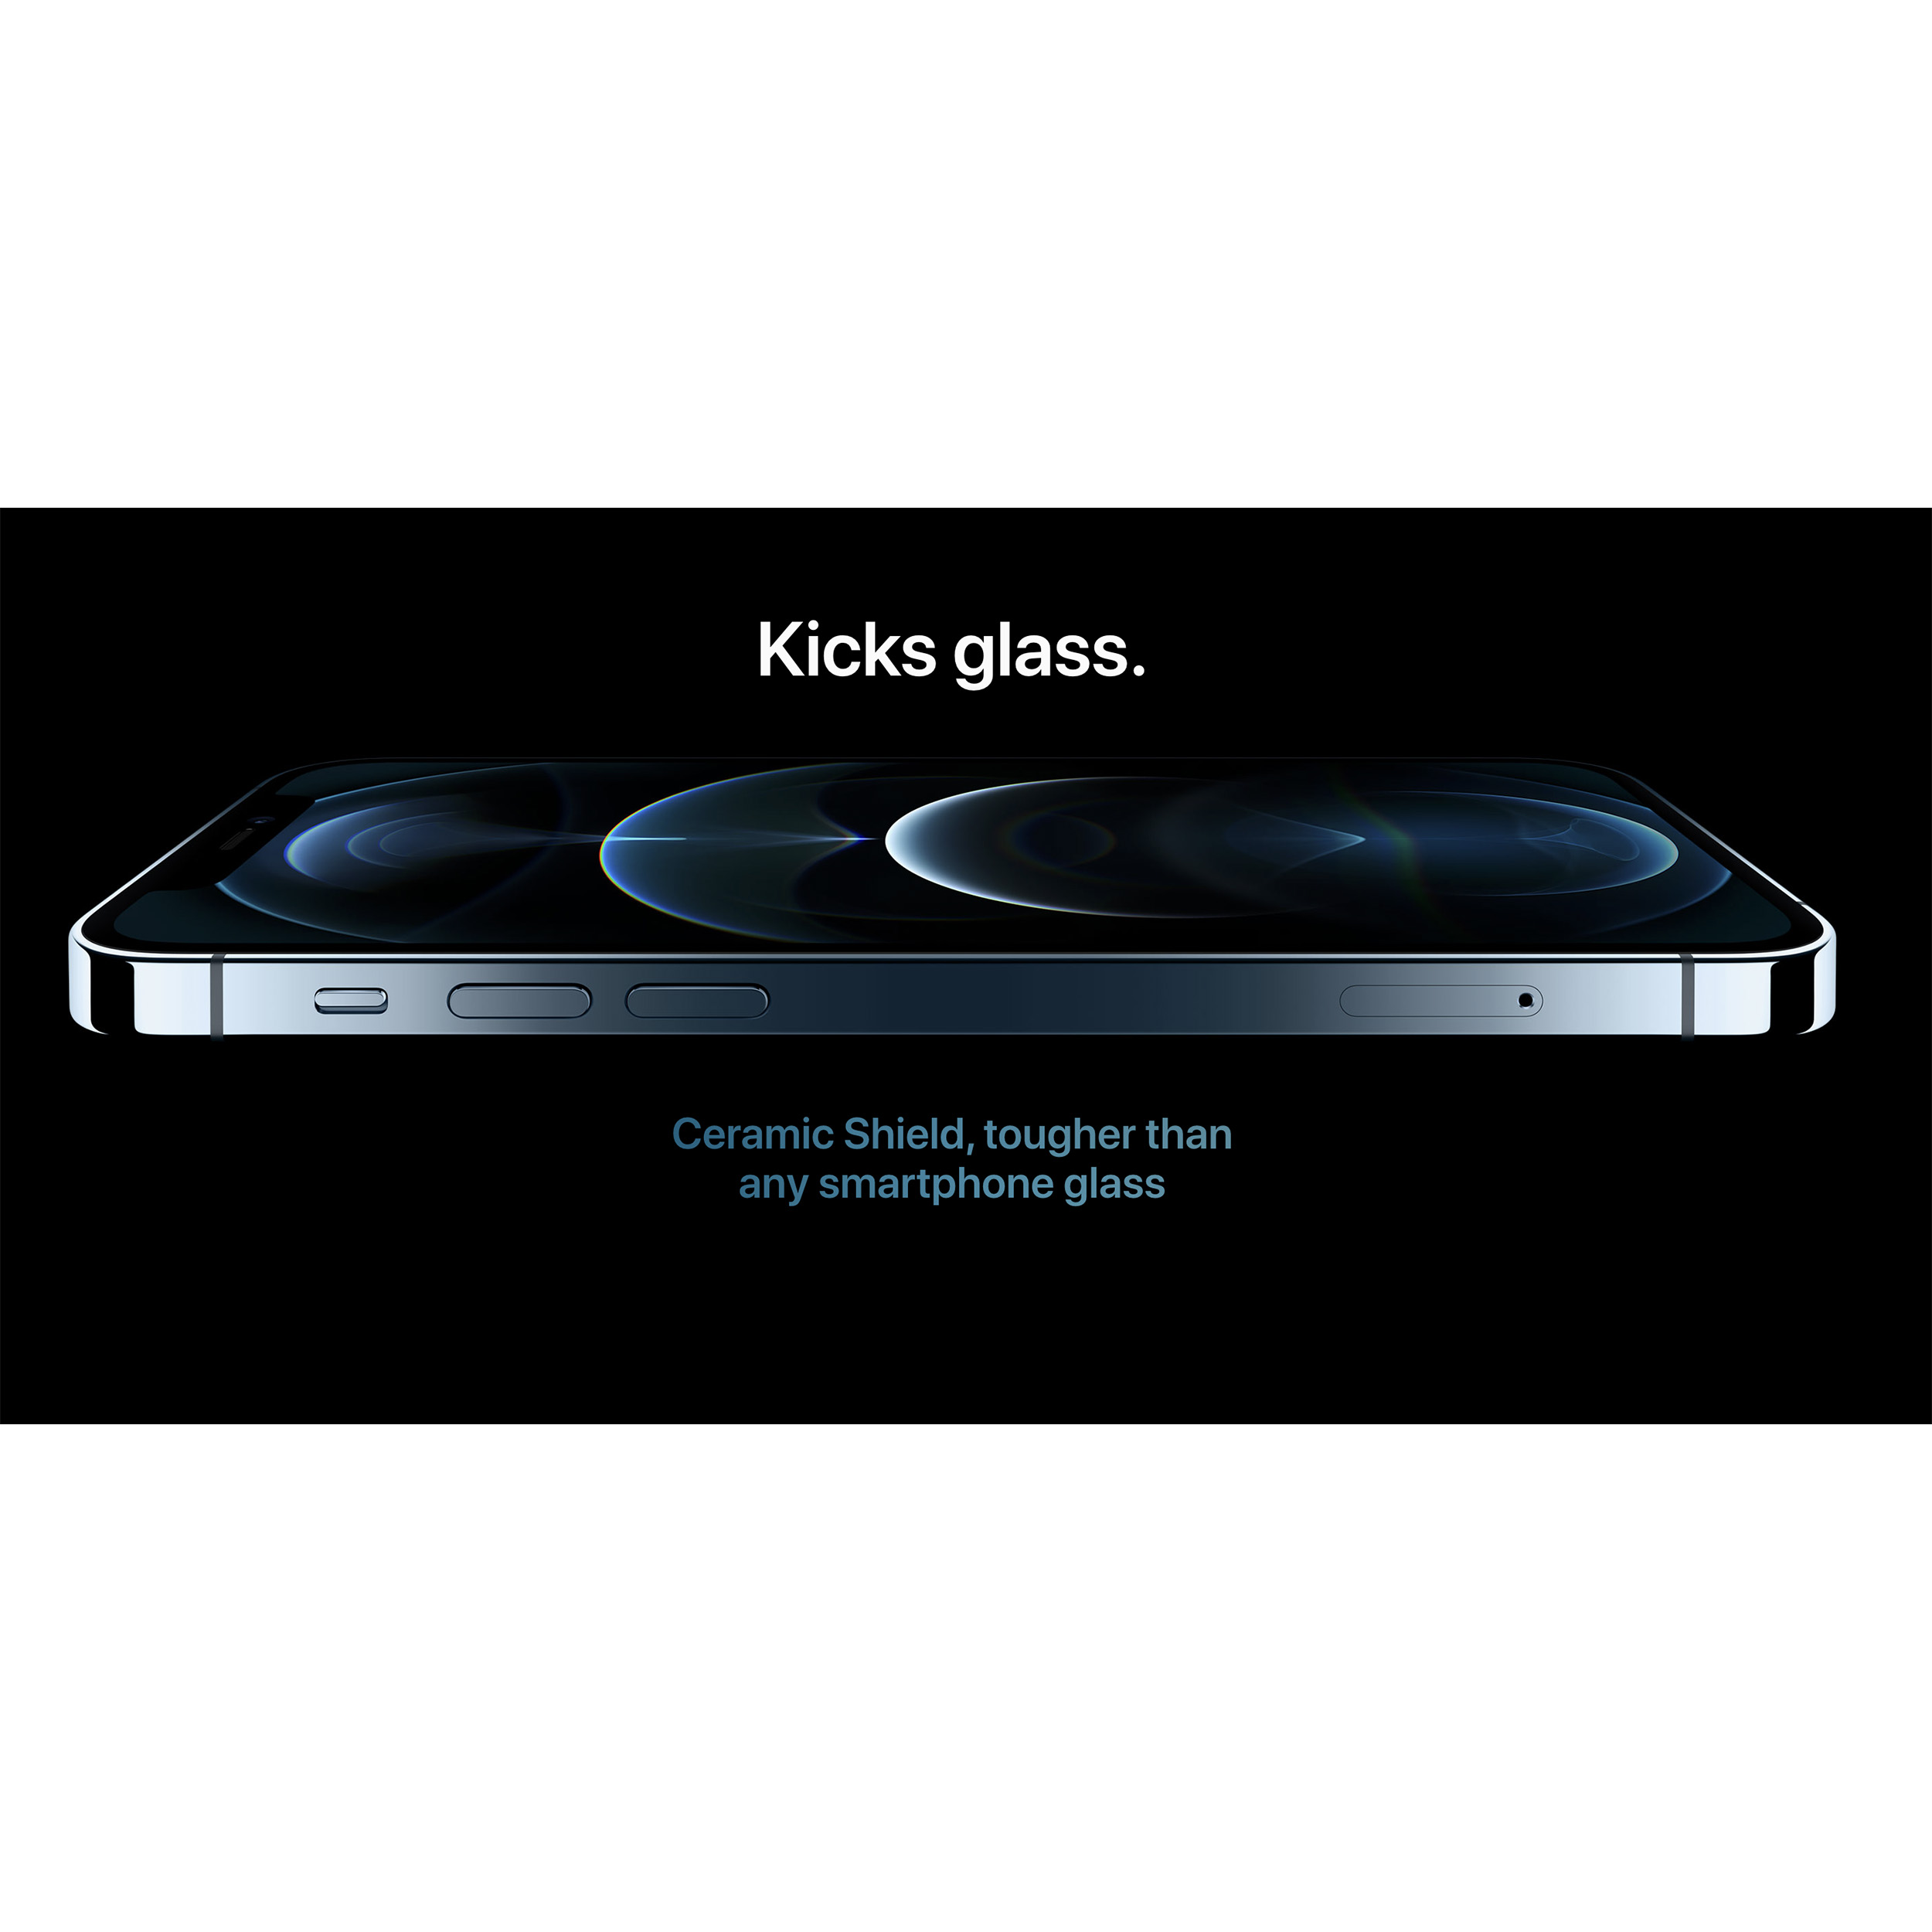 گوشی موبایل اپل مدل iPhone 12 Pro A2407 دو سیم‌ کارت ظرفیت 512 گیگابایت